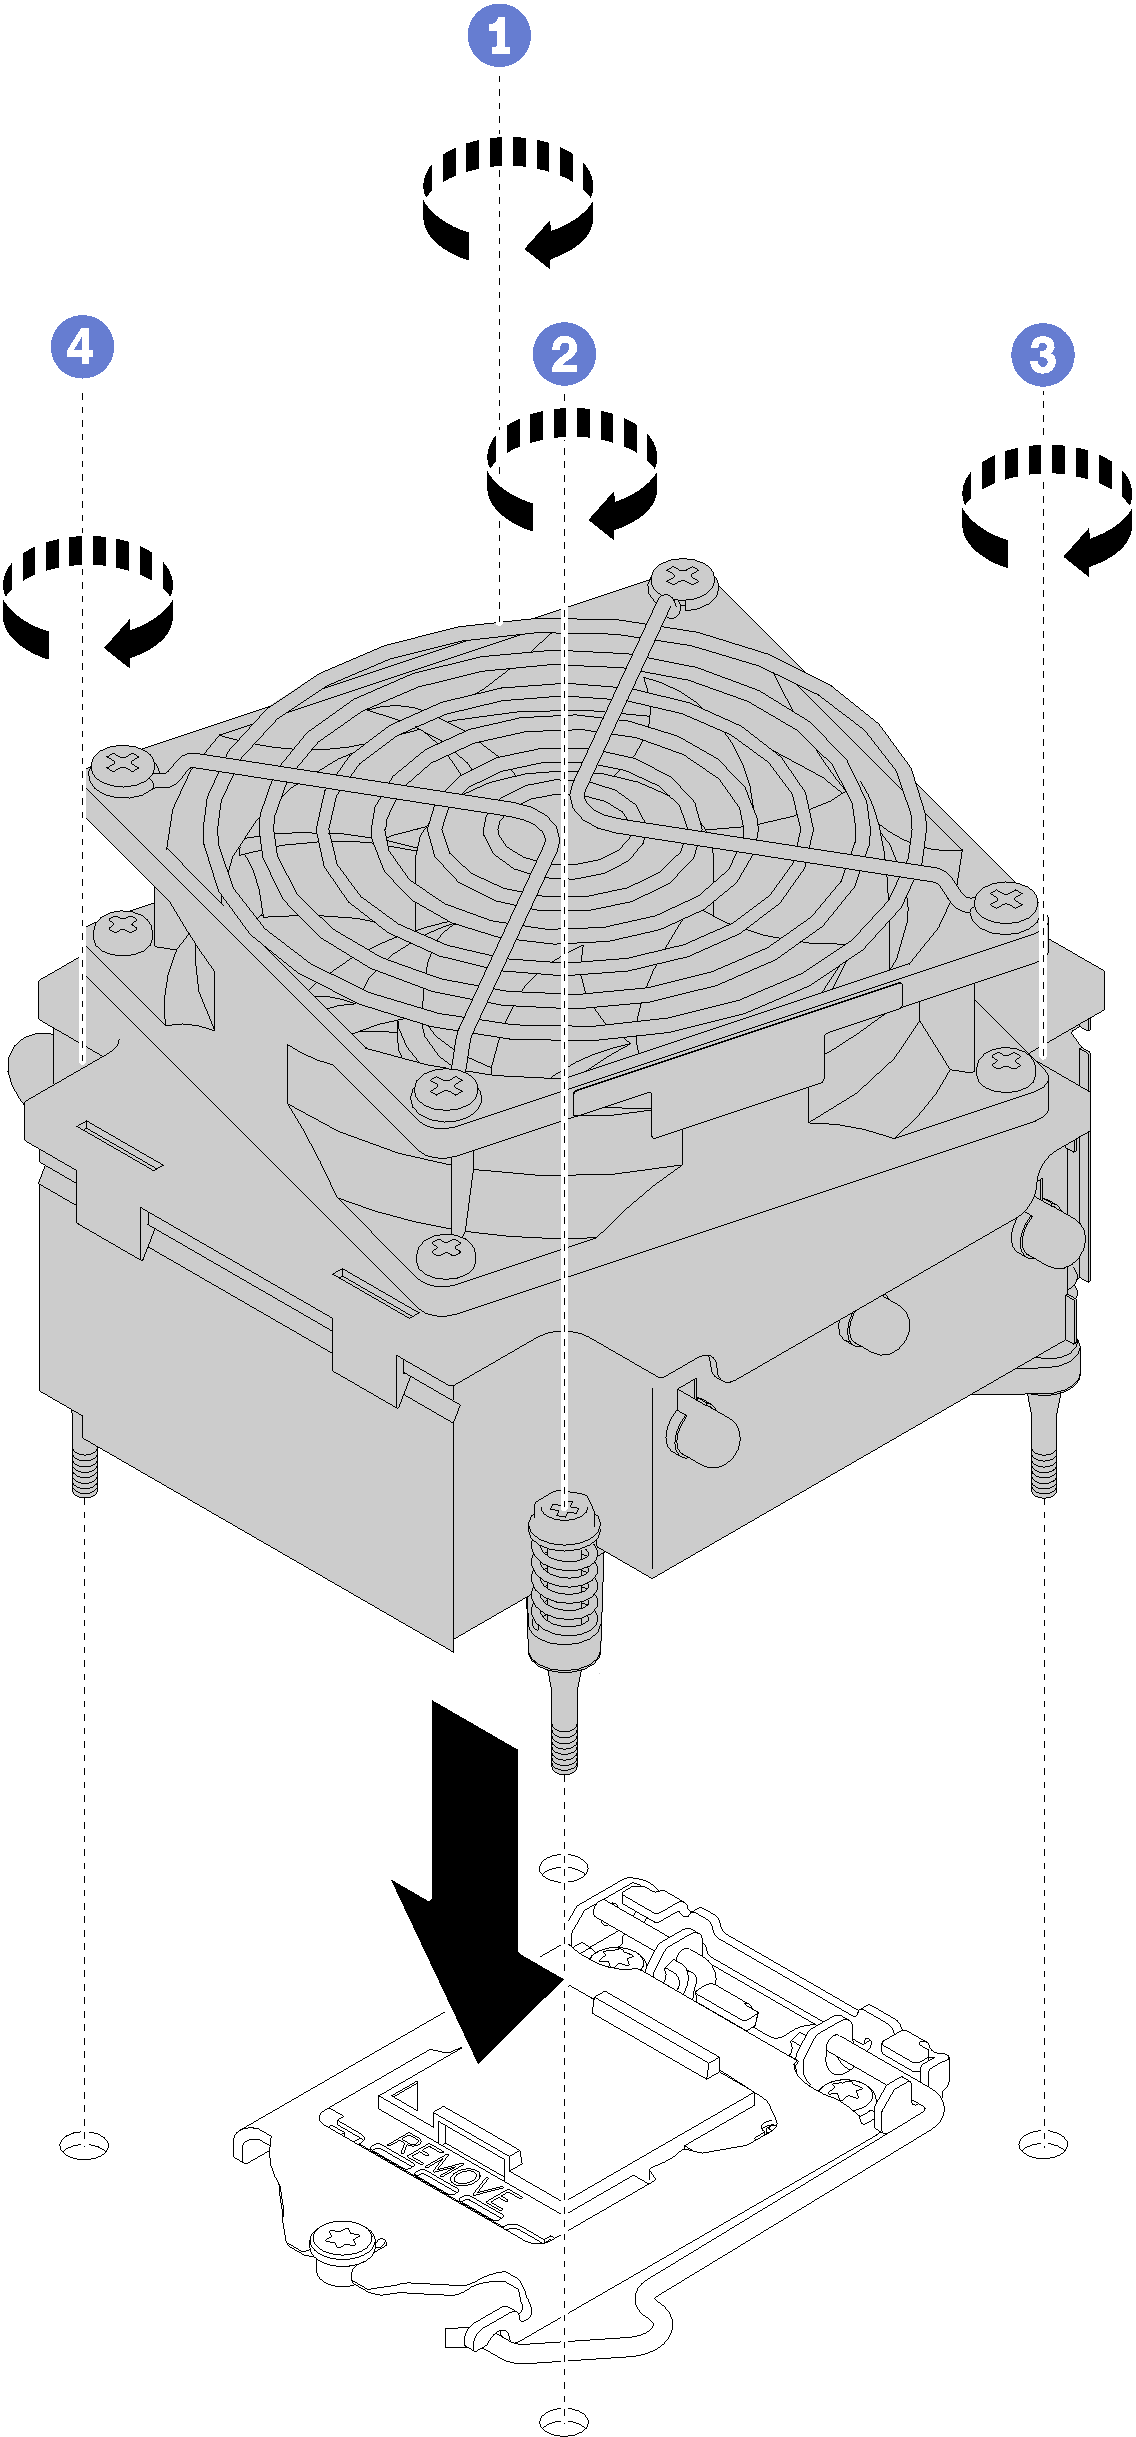 Installing the heat sink and the fan module